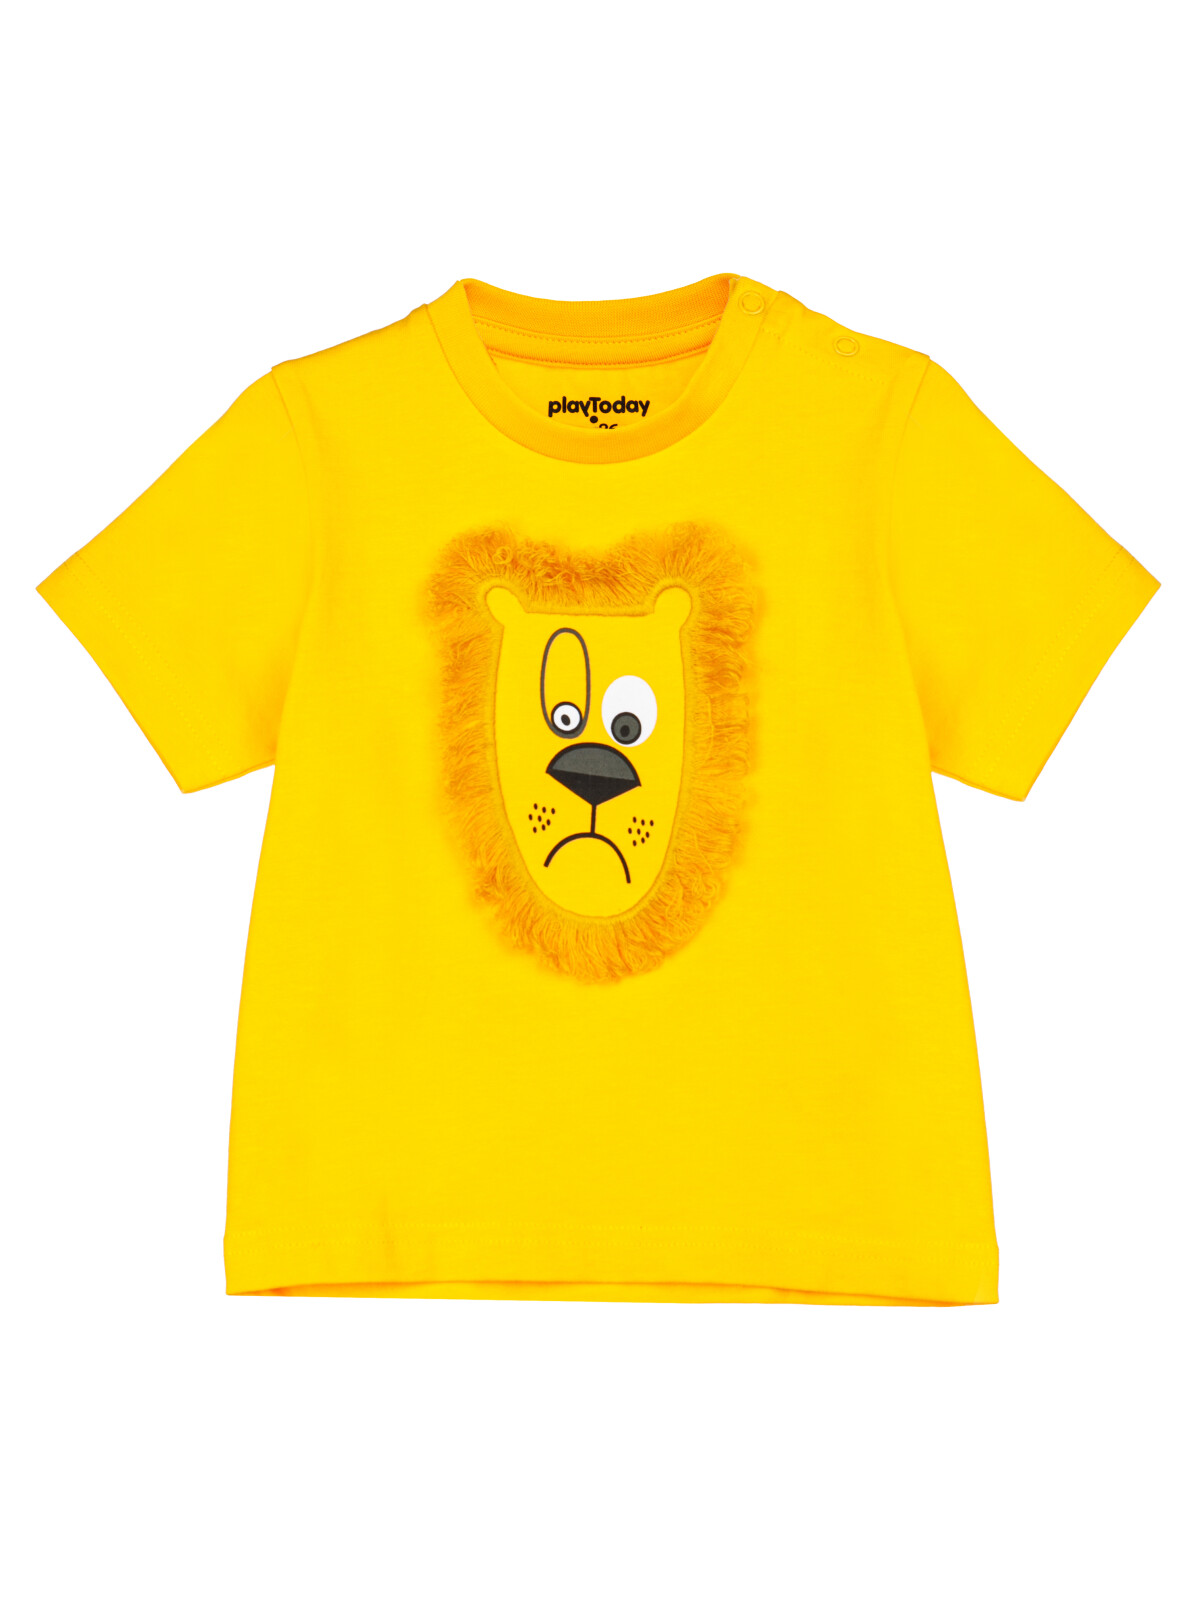 Фуфайка детская (футболка) PlayToday 12419132, жёлтый, 86